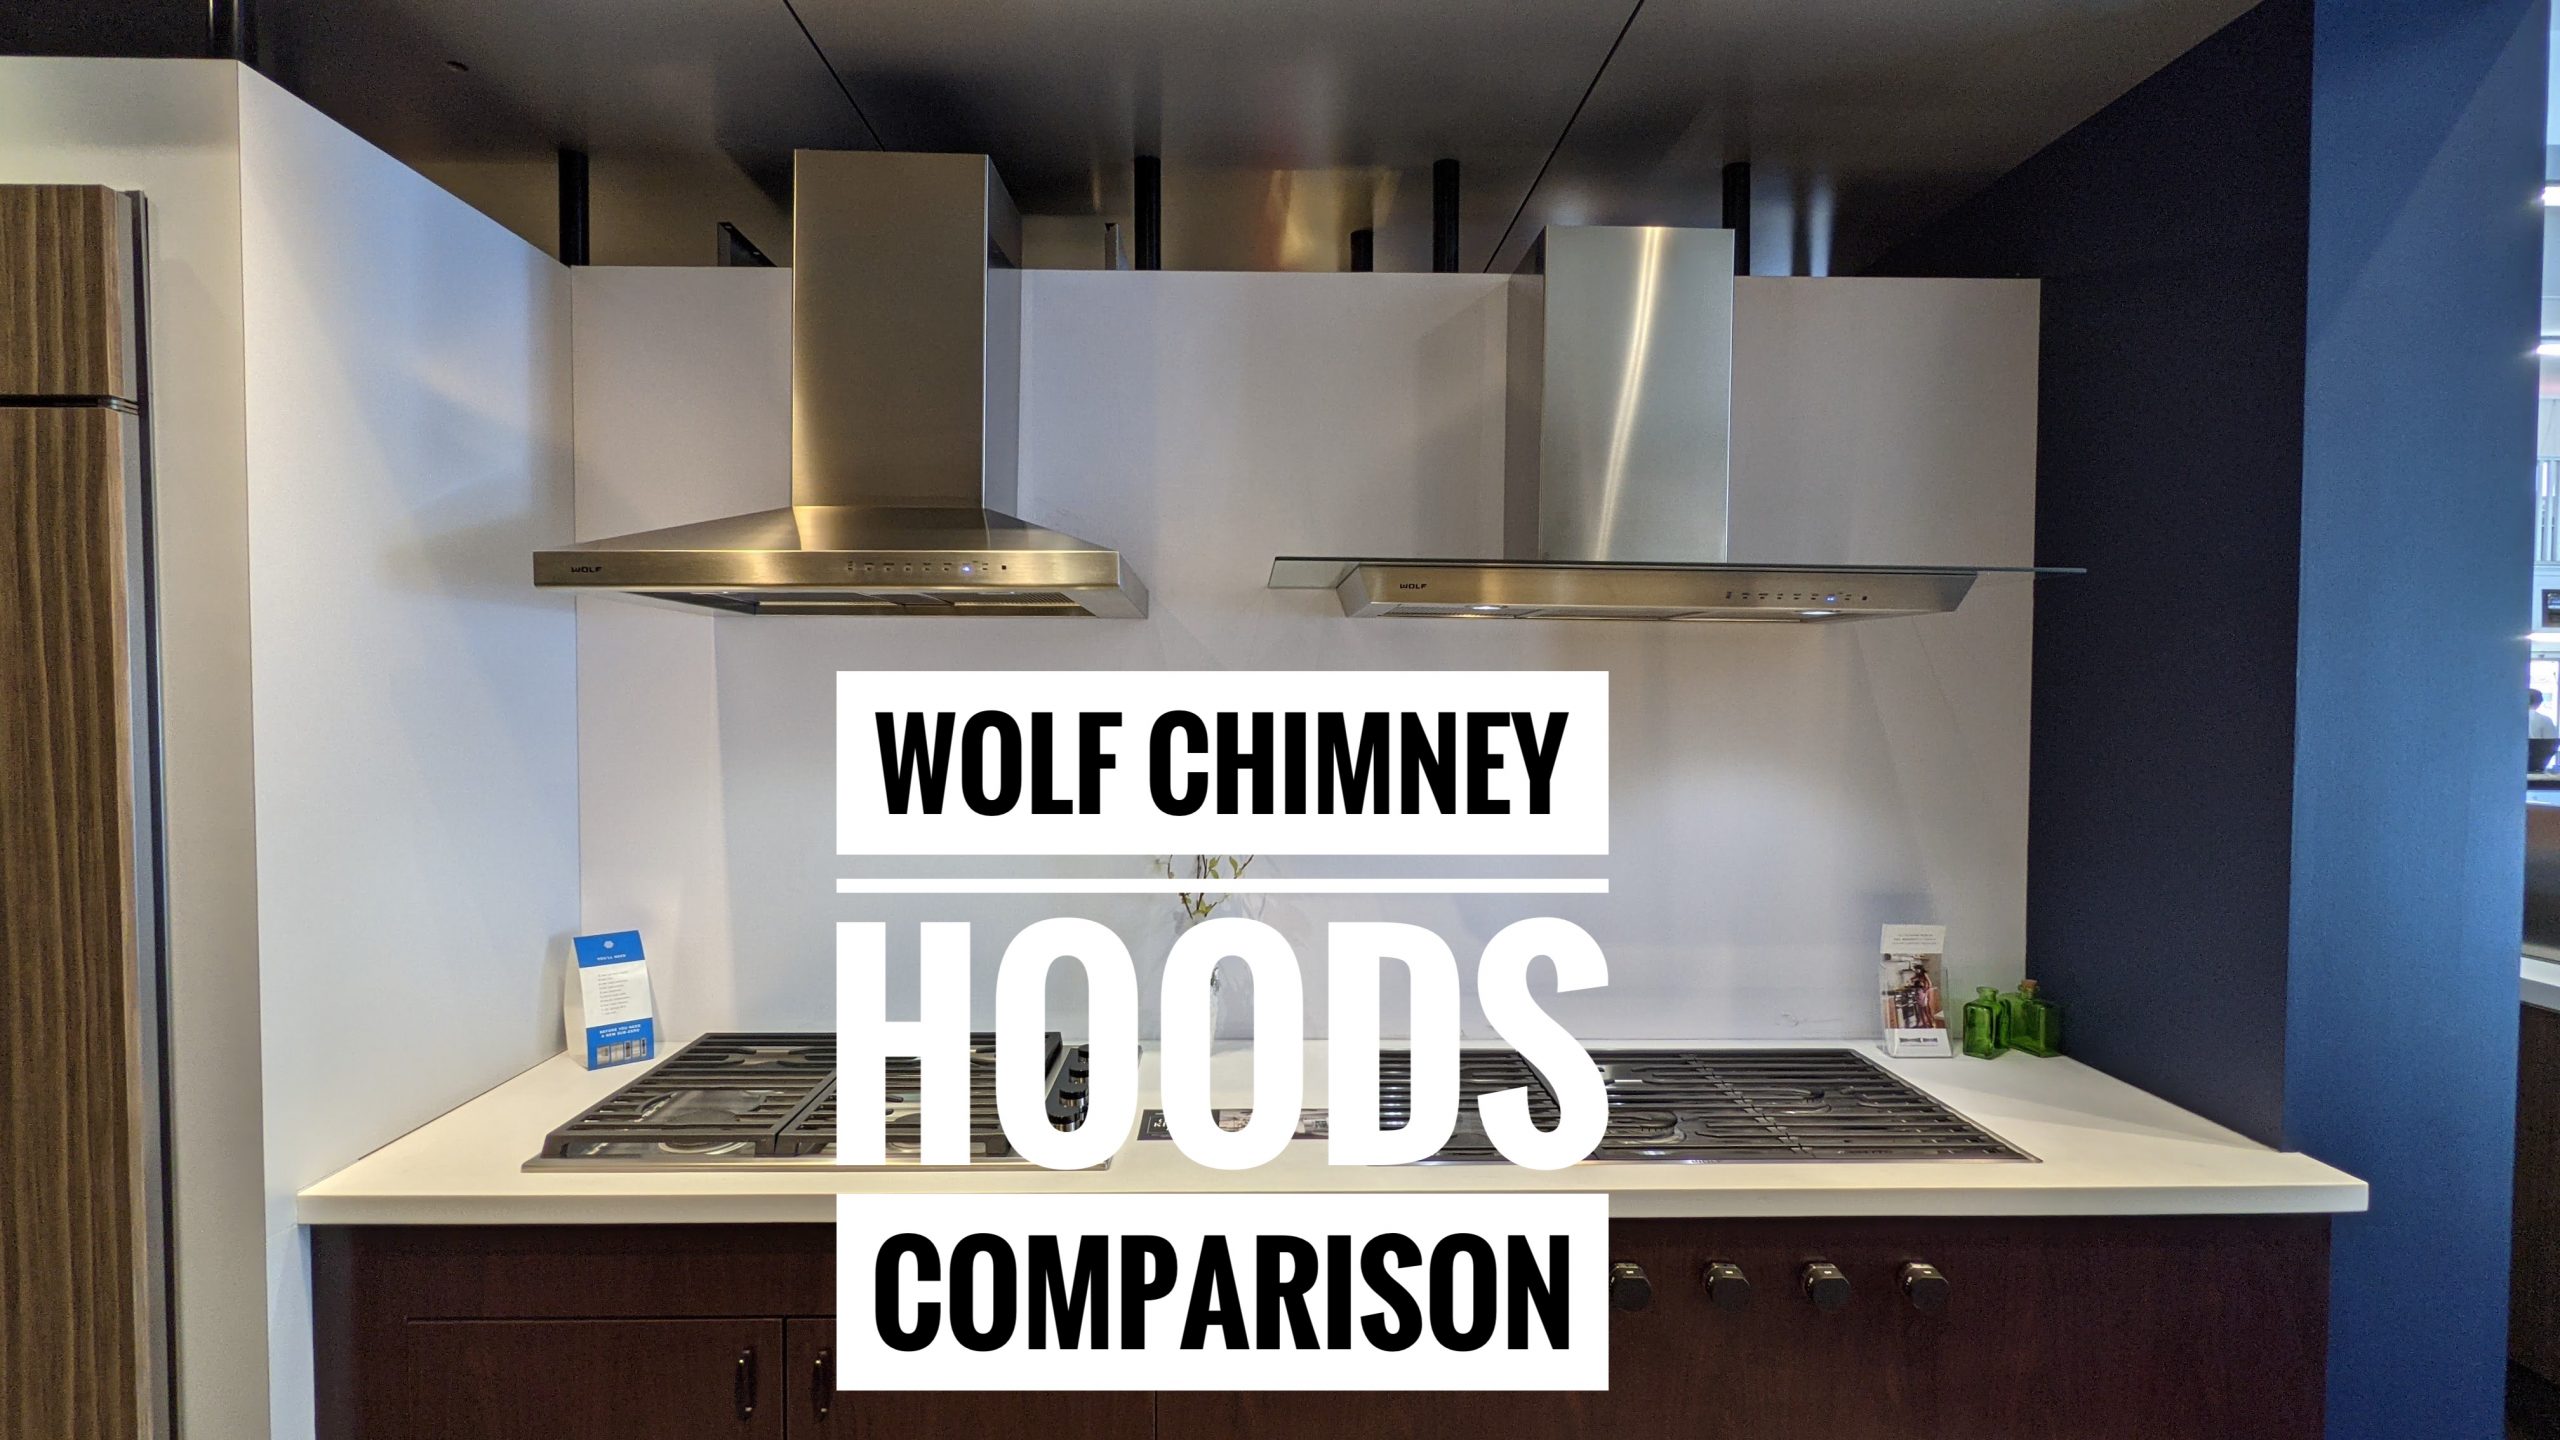 Wolf chimney hoods comparison